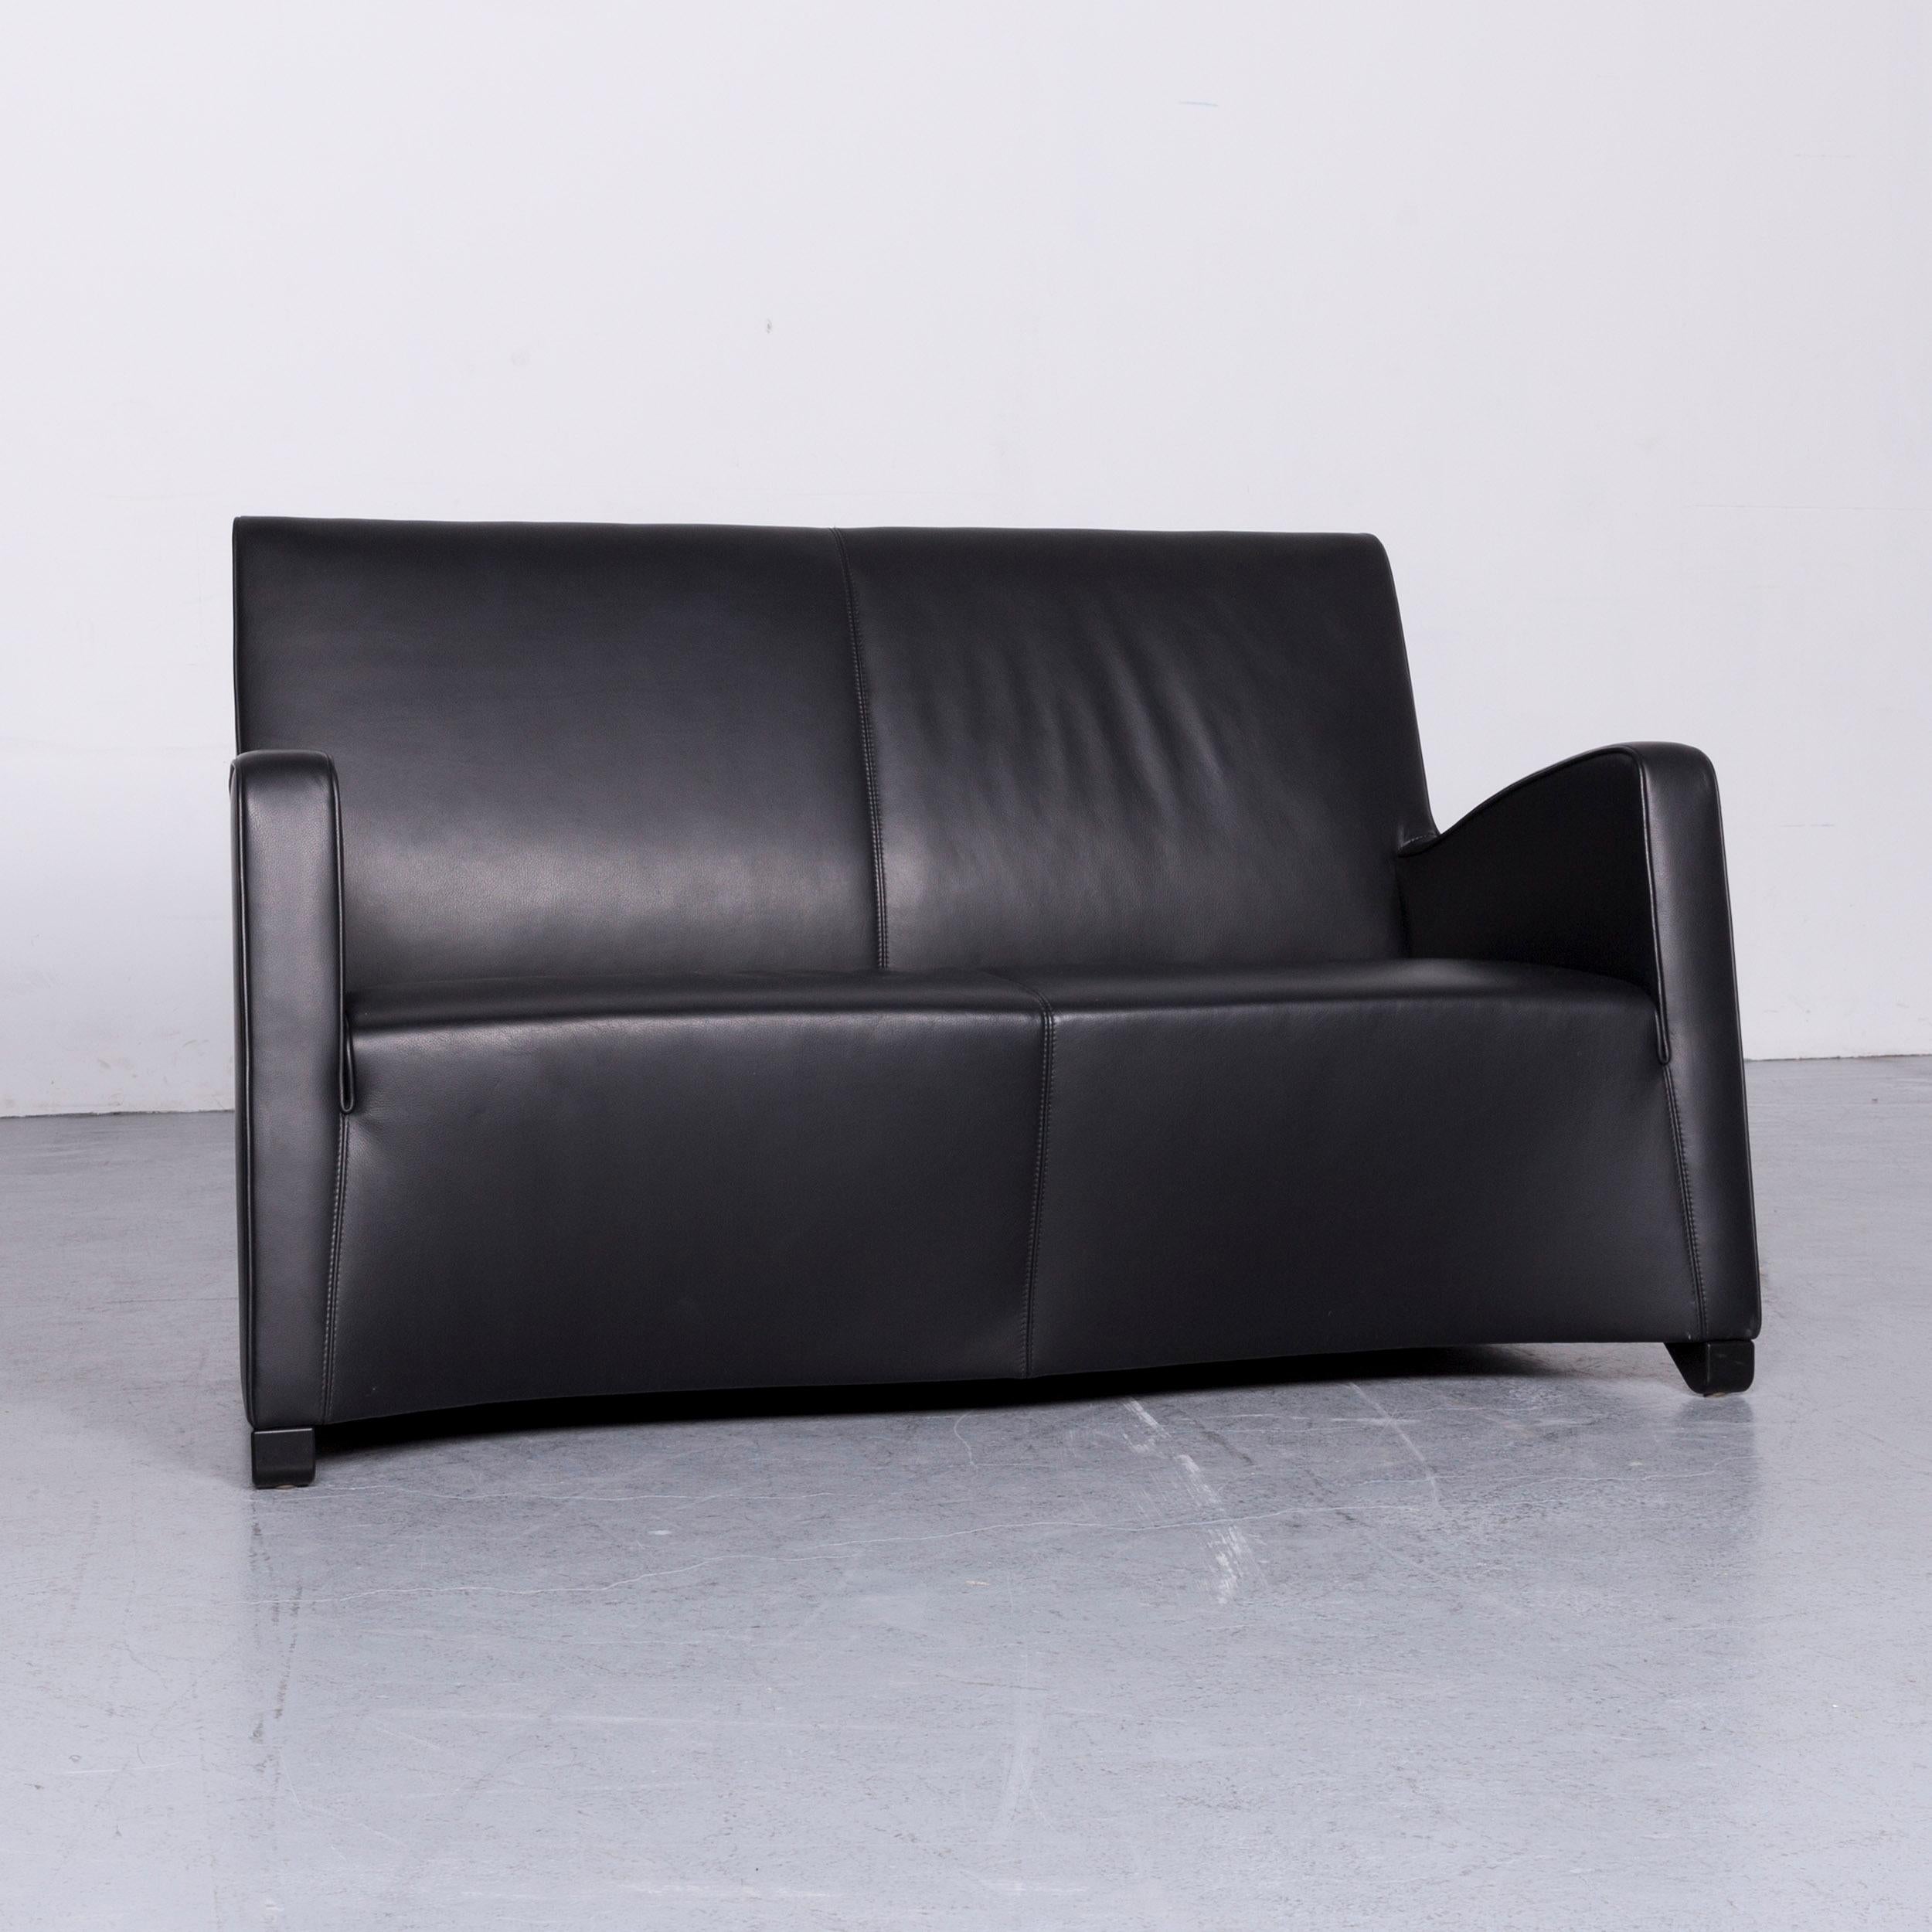 German Wittmann Duke Designer Leather Sofa Armchair Set Black Two-Seat Couch